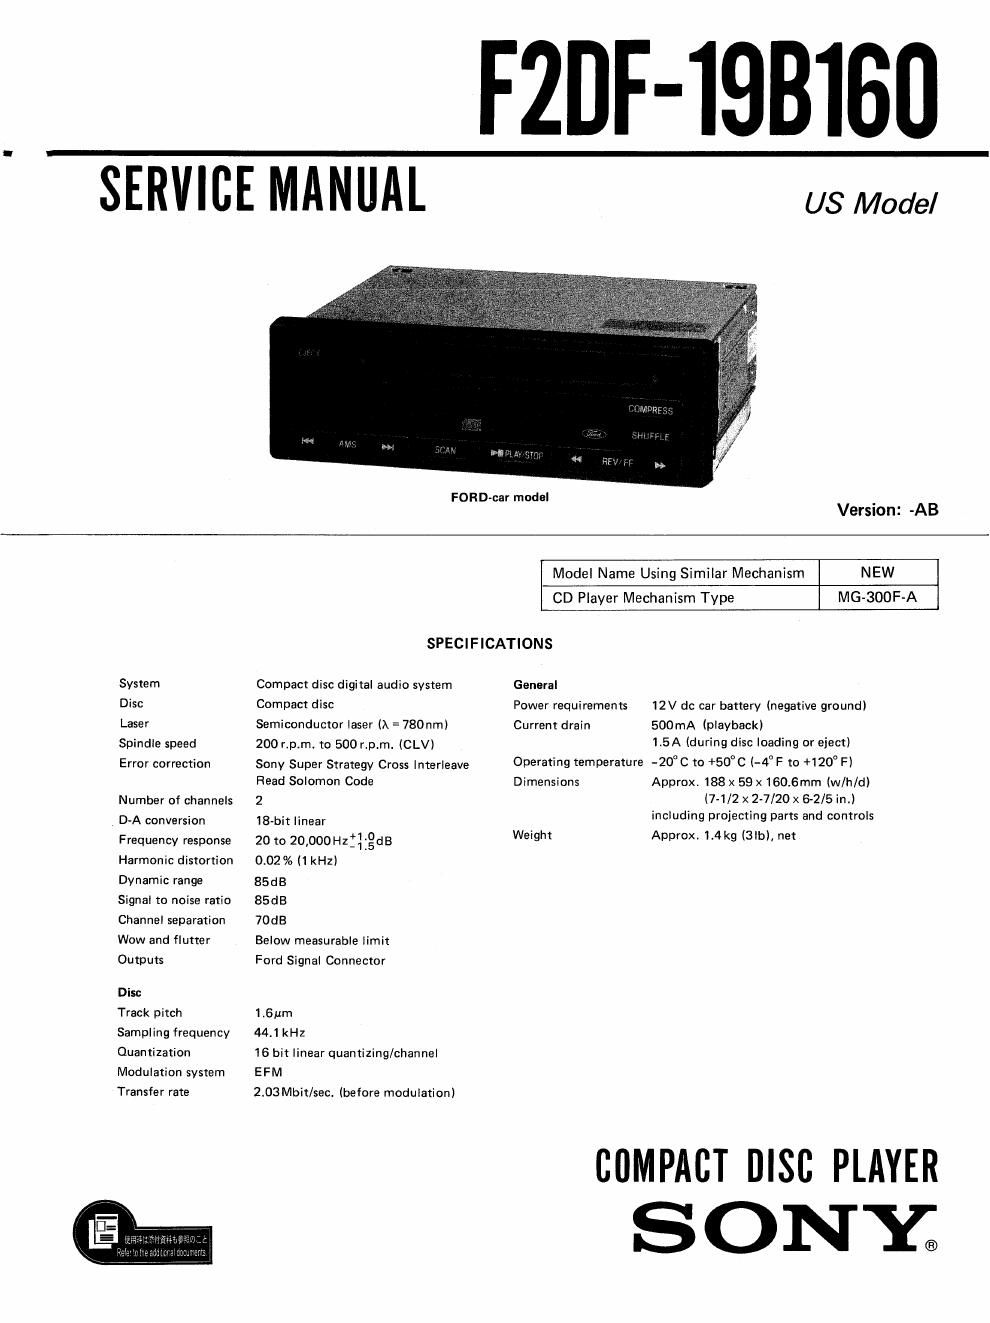 sony f 2 df 19 b 160 service manual